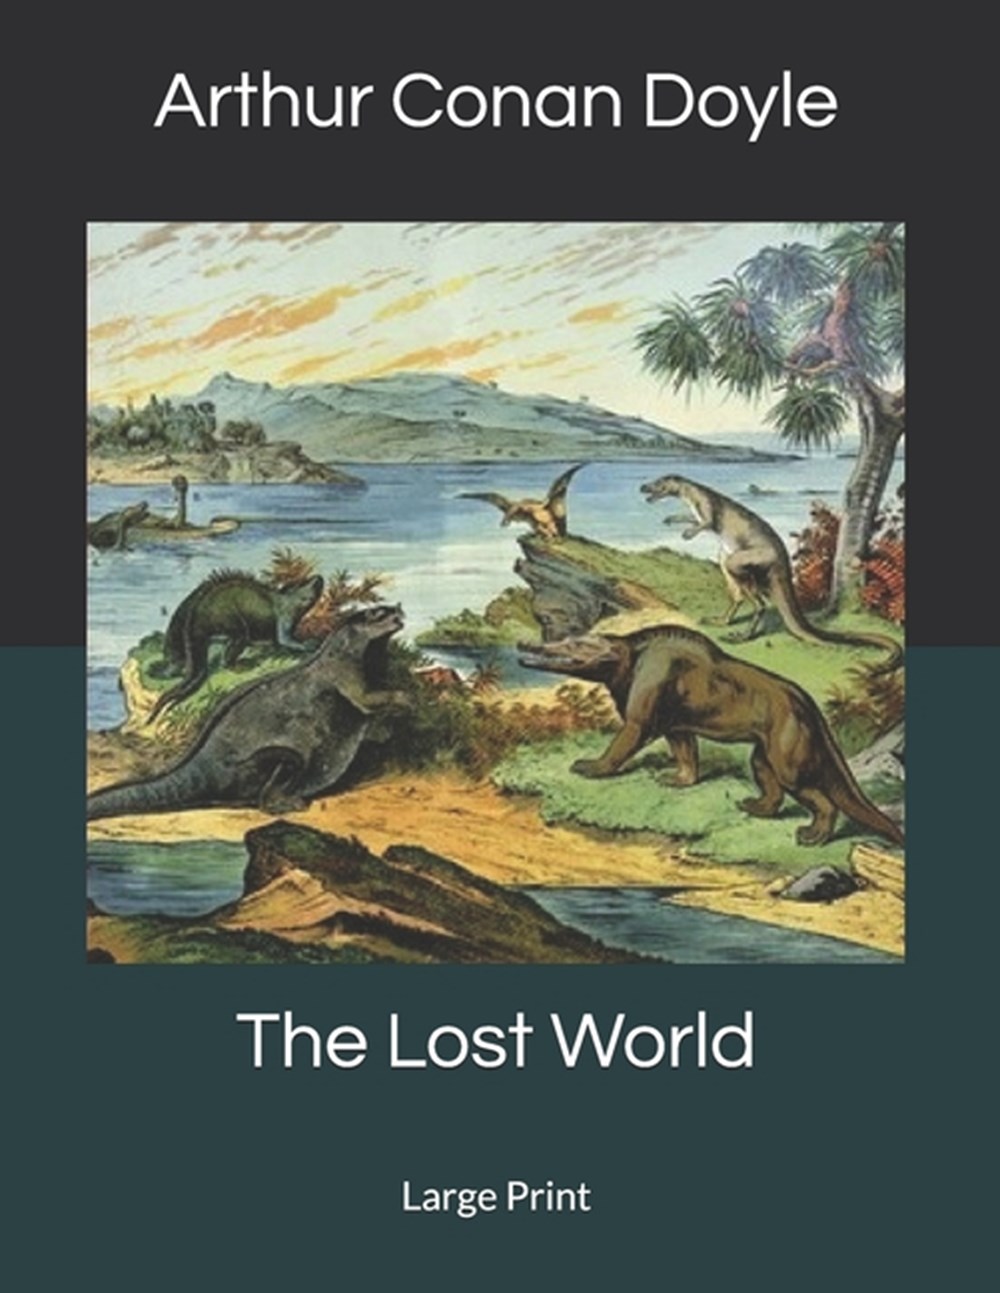 Lost World Large Print